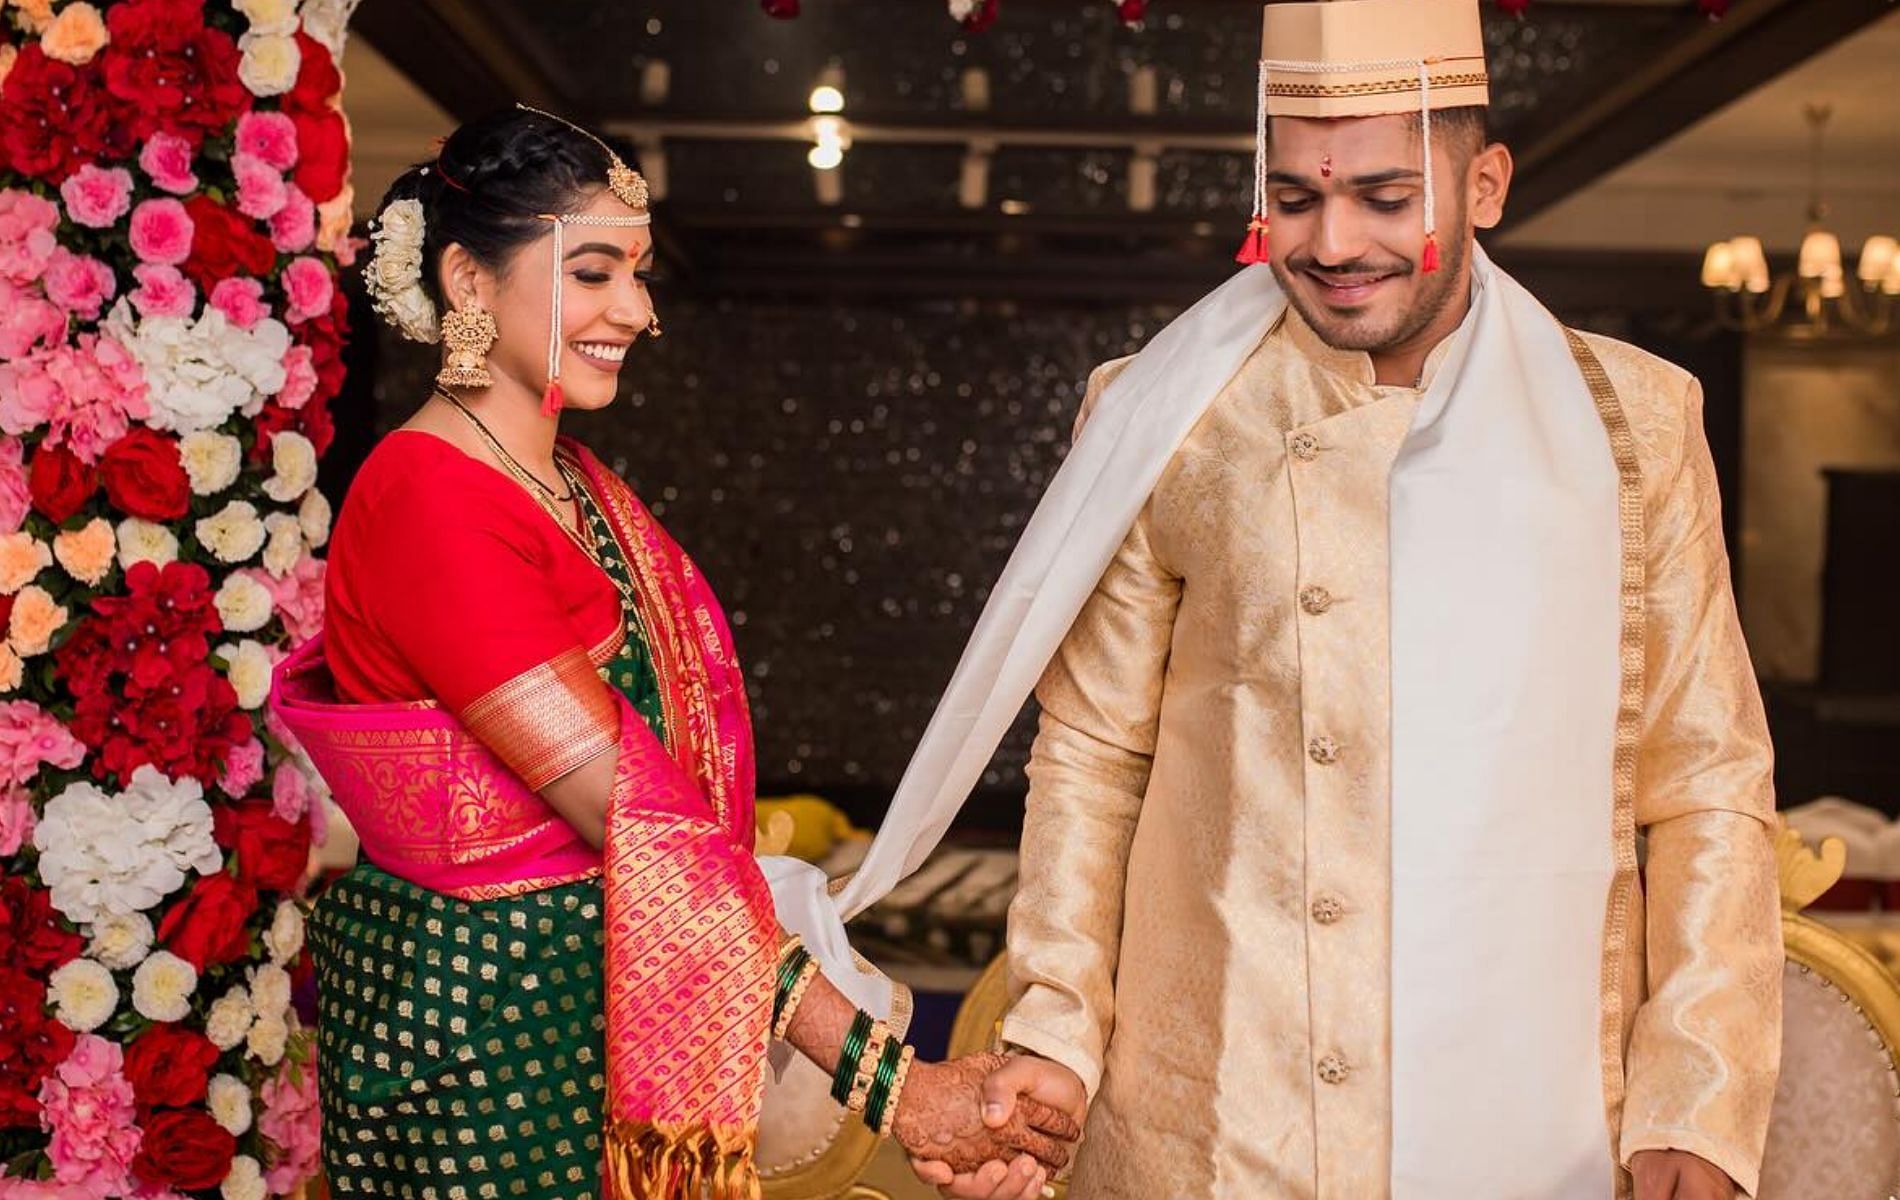 Newly weds Nabha Gaddamwar (L) with Tushar Deshpande (R). (Pic: Instagram)